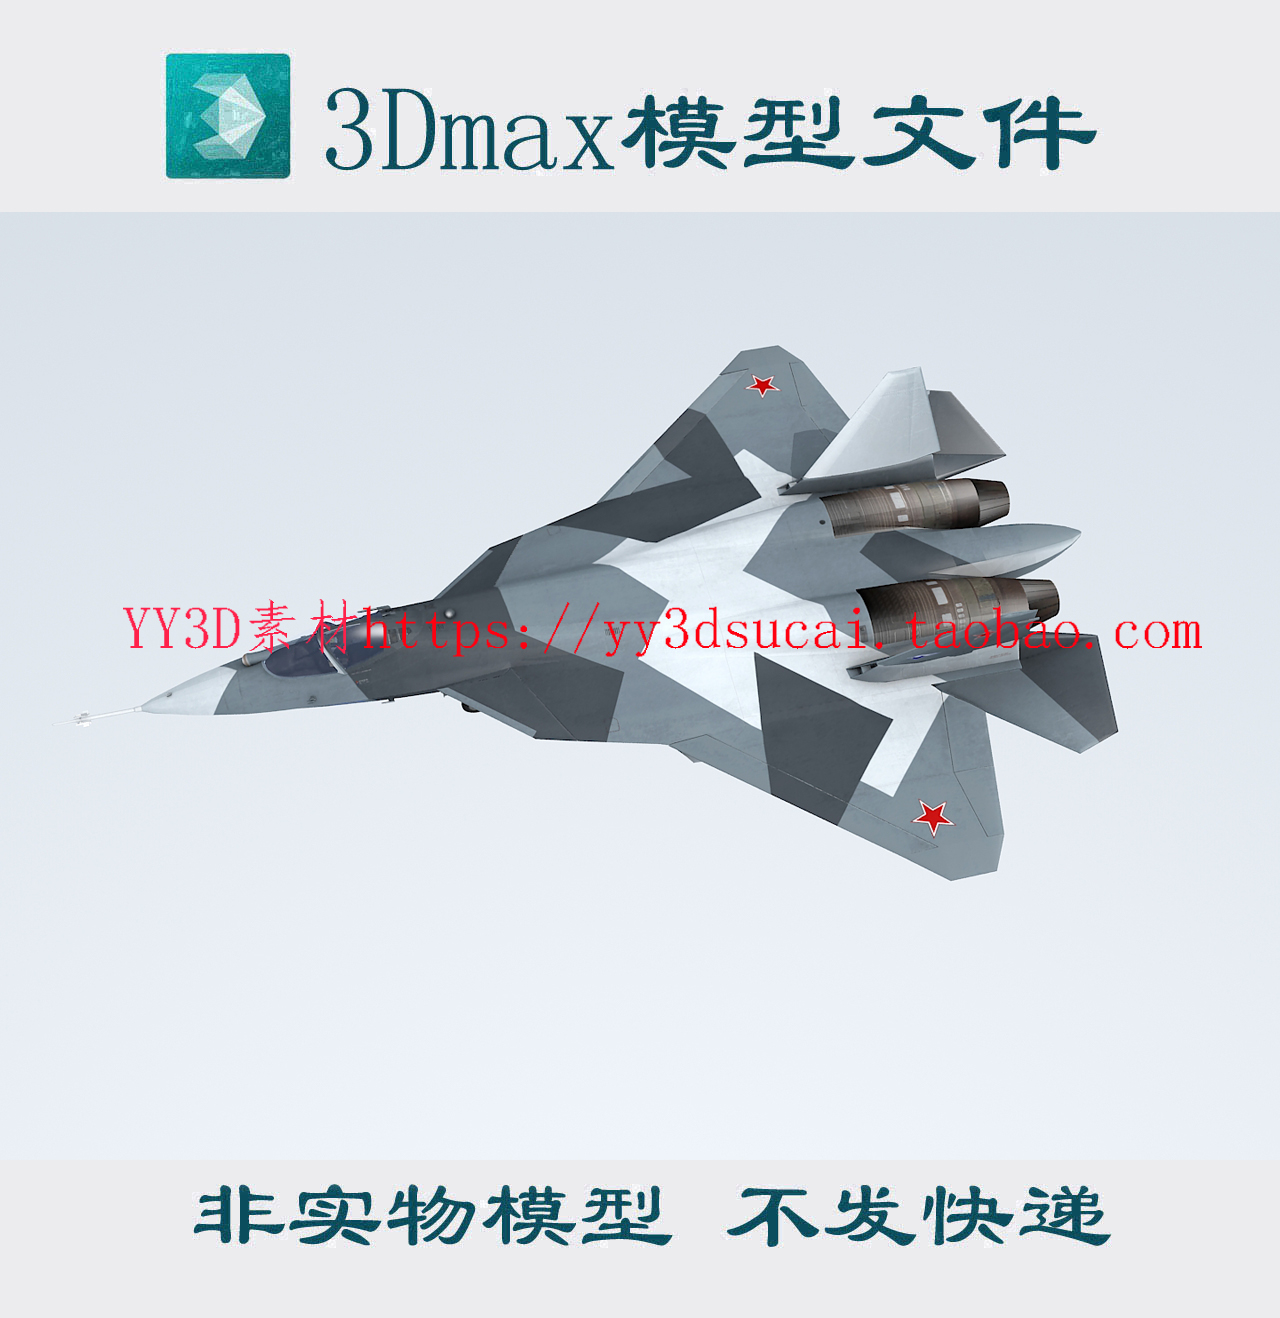 【m1355】苏-57战斗机3dmax模型T50战斗机c4d/fbx/obj格式t50战机